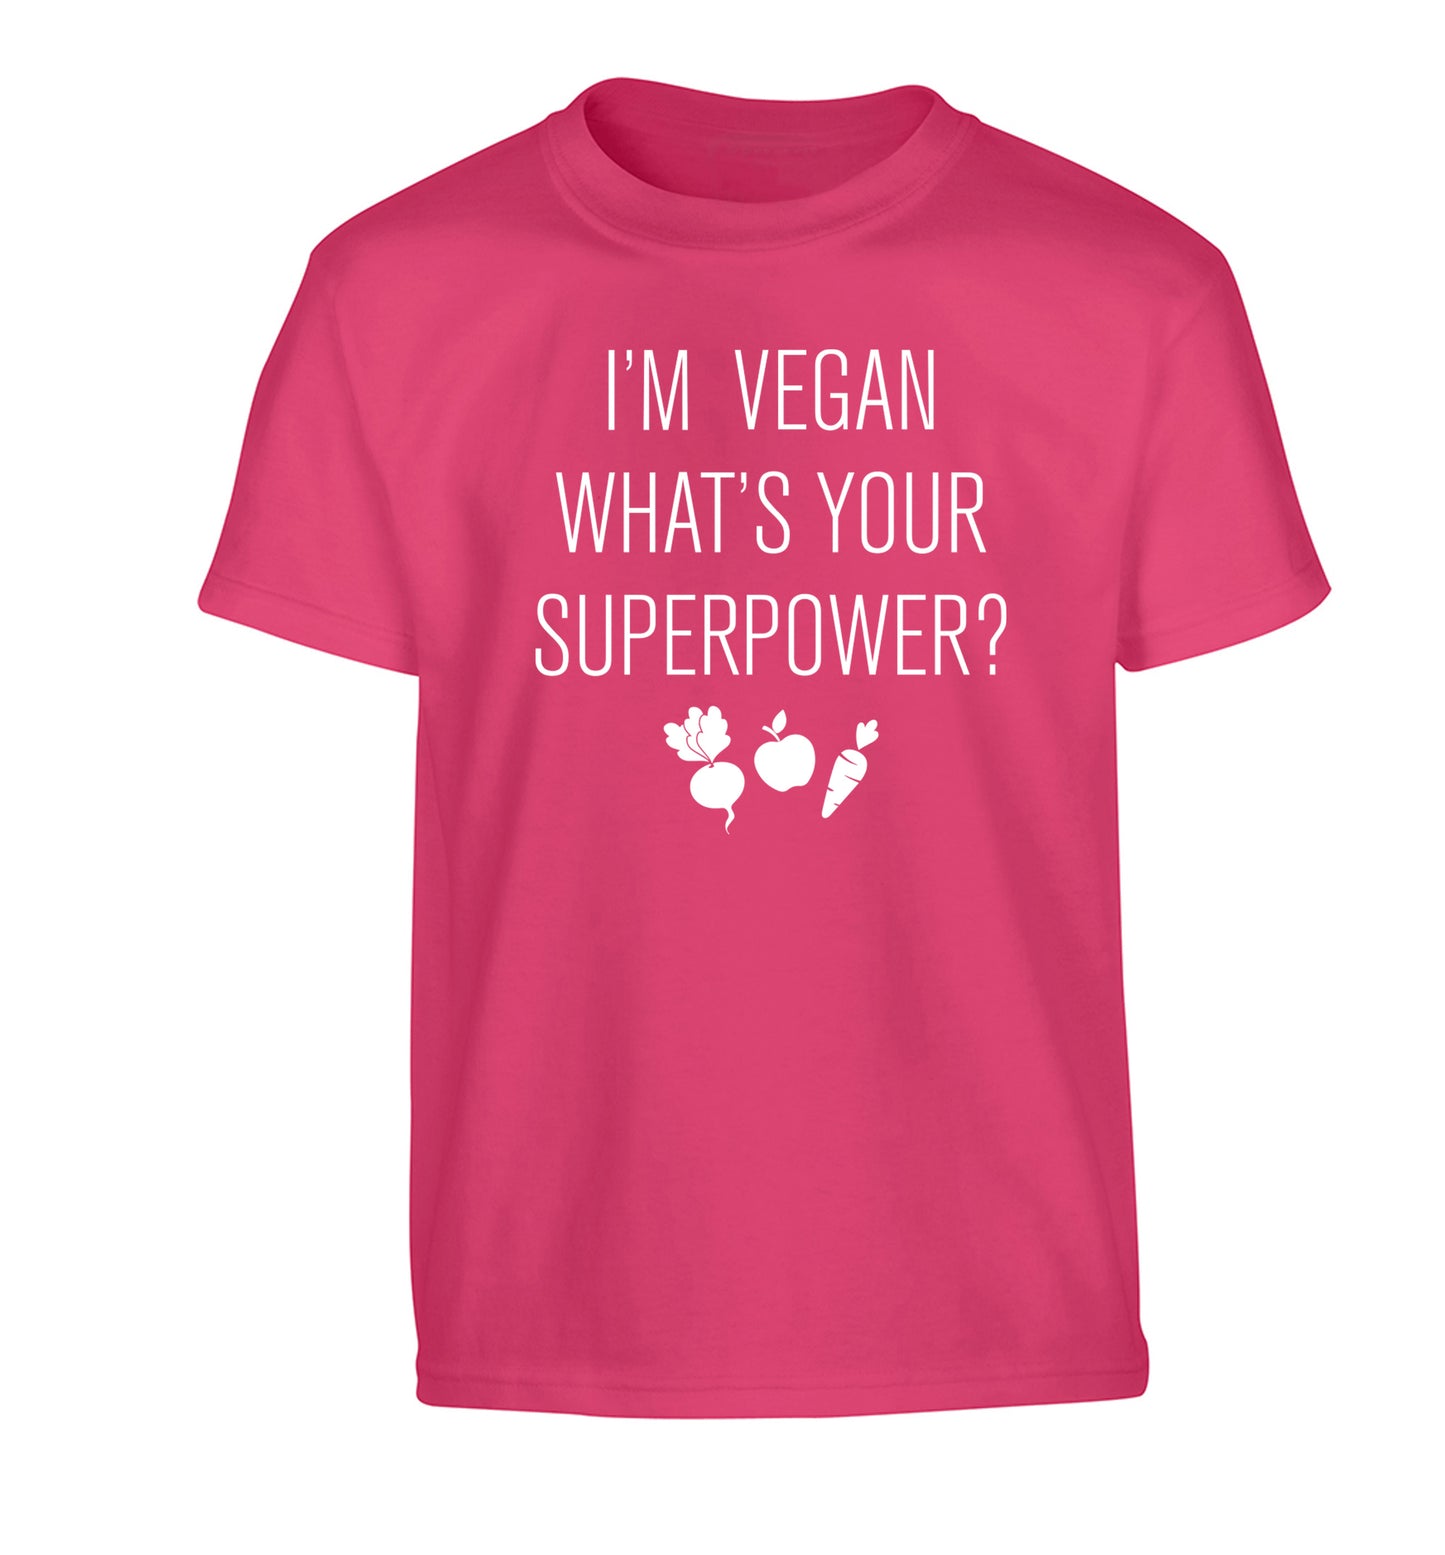 I'm Vegan What's Your Superpower? Children's pink Tshirt 12-13 Years